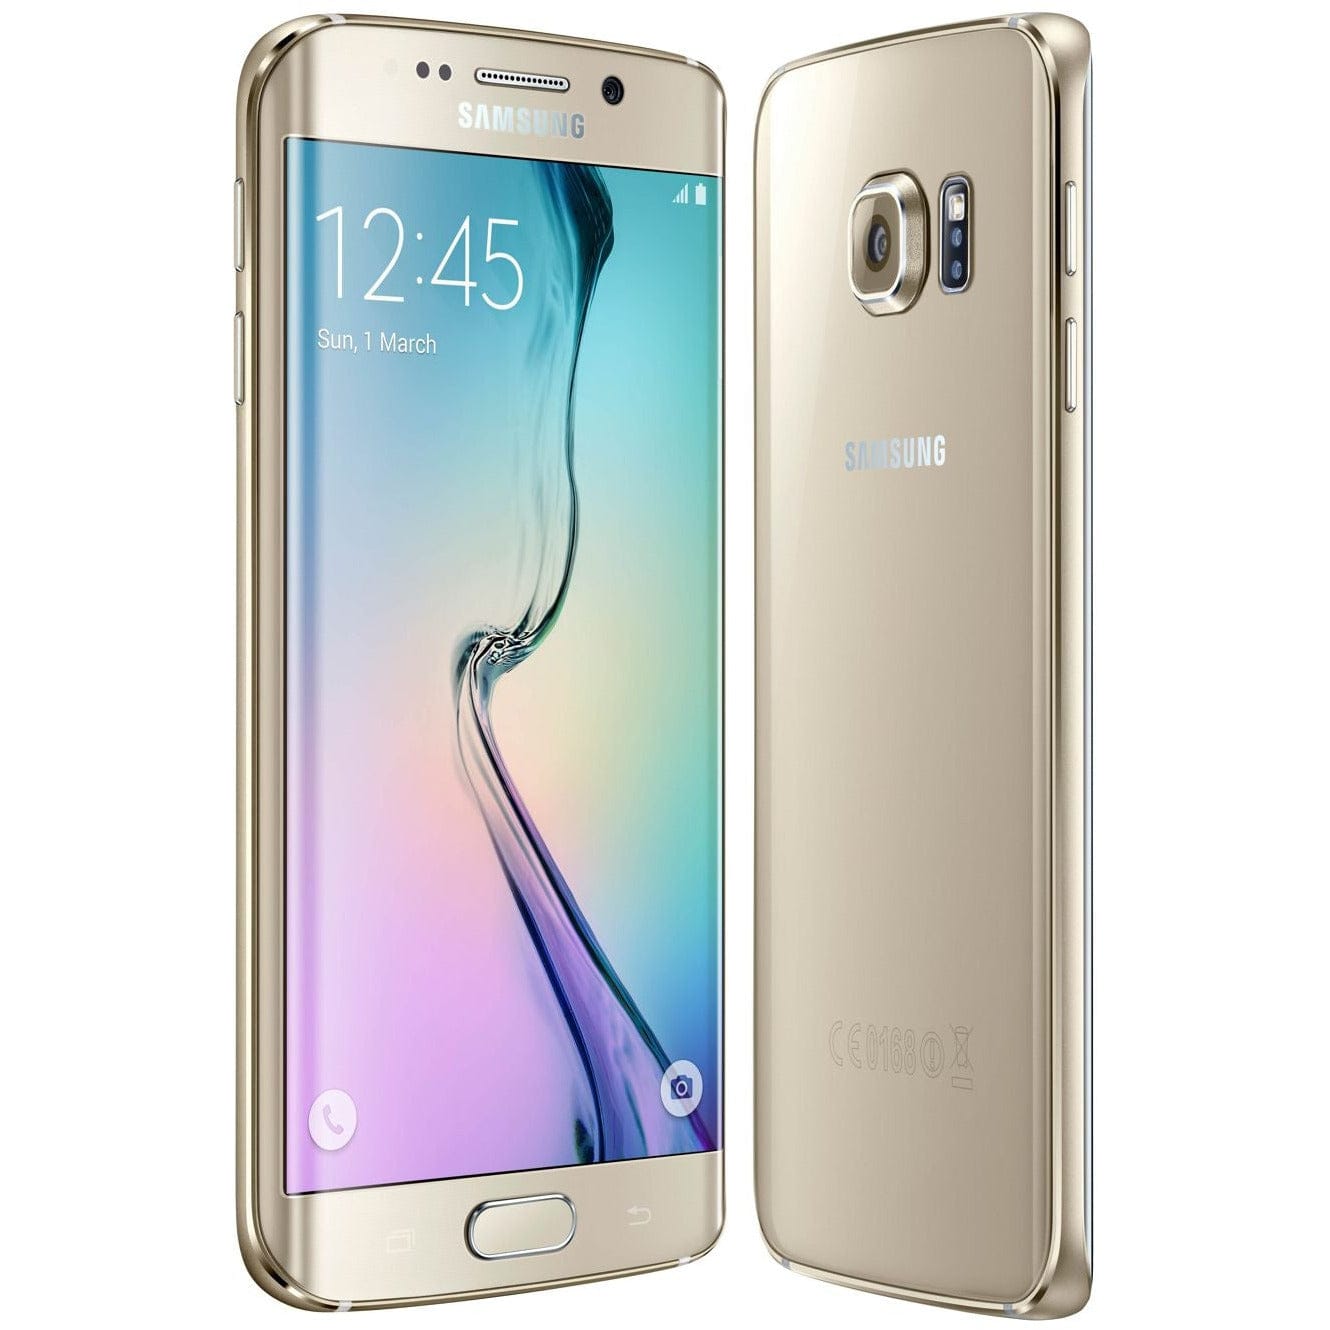 Samsung Galaxy S6 edge - 64 GB - Gold Platinum - T-Mobile - GSM